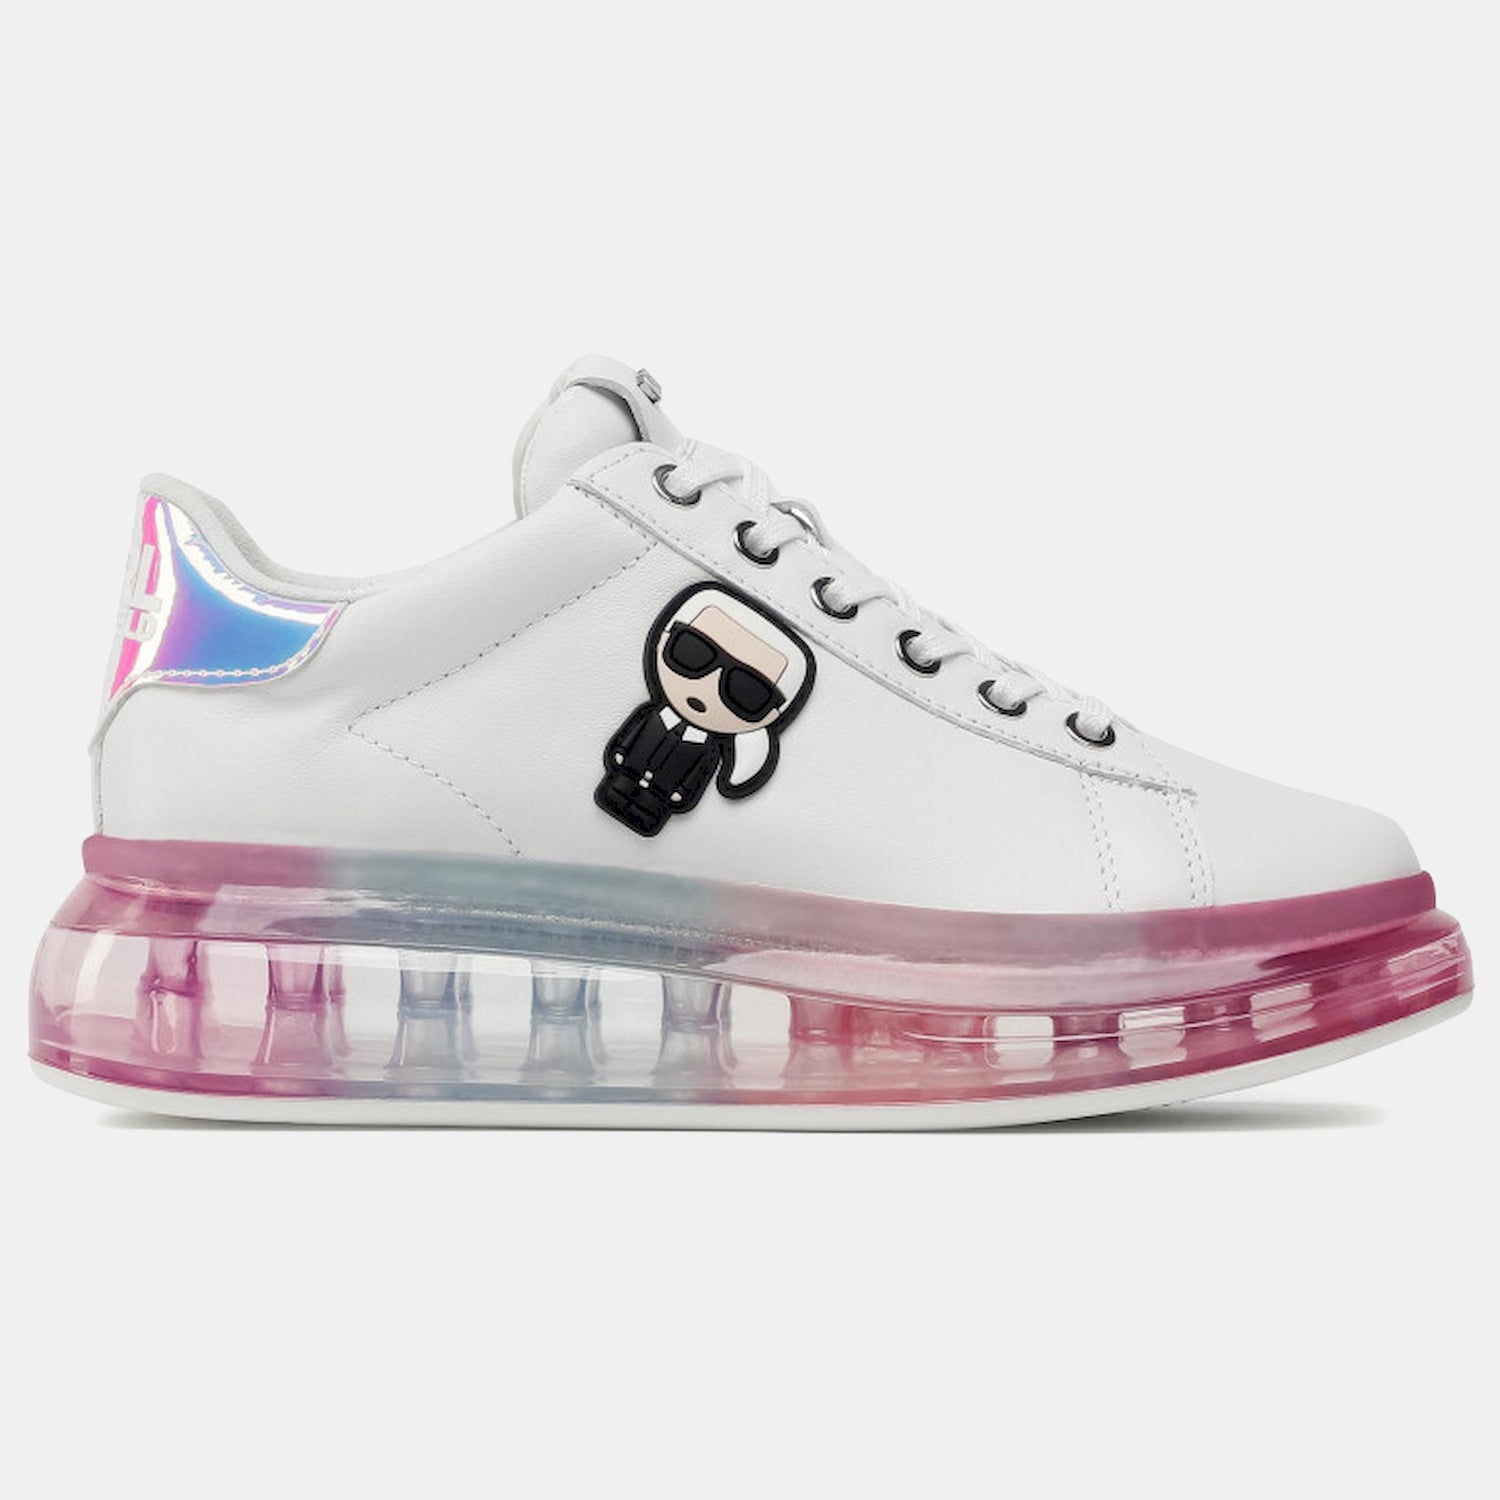 Karl Lagerfeld Sapatilhas Sneakers Shoes Kl62689 Whi Pink Branco Rosa_shot3